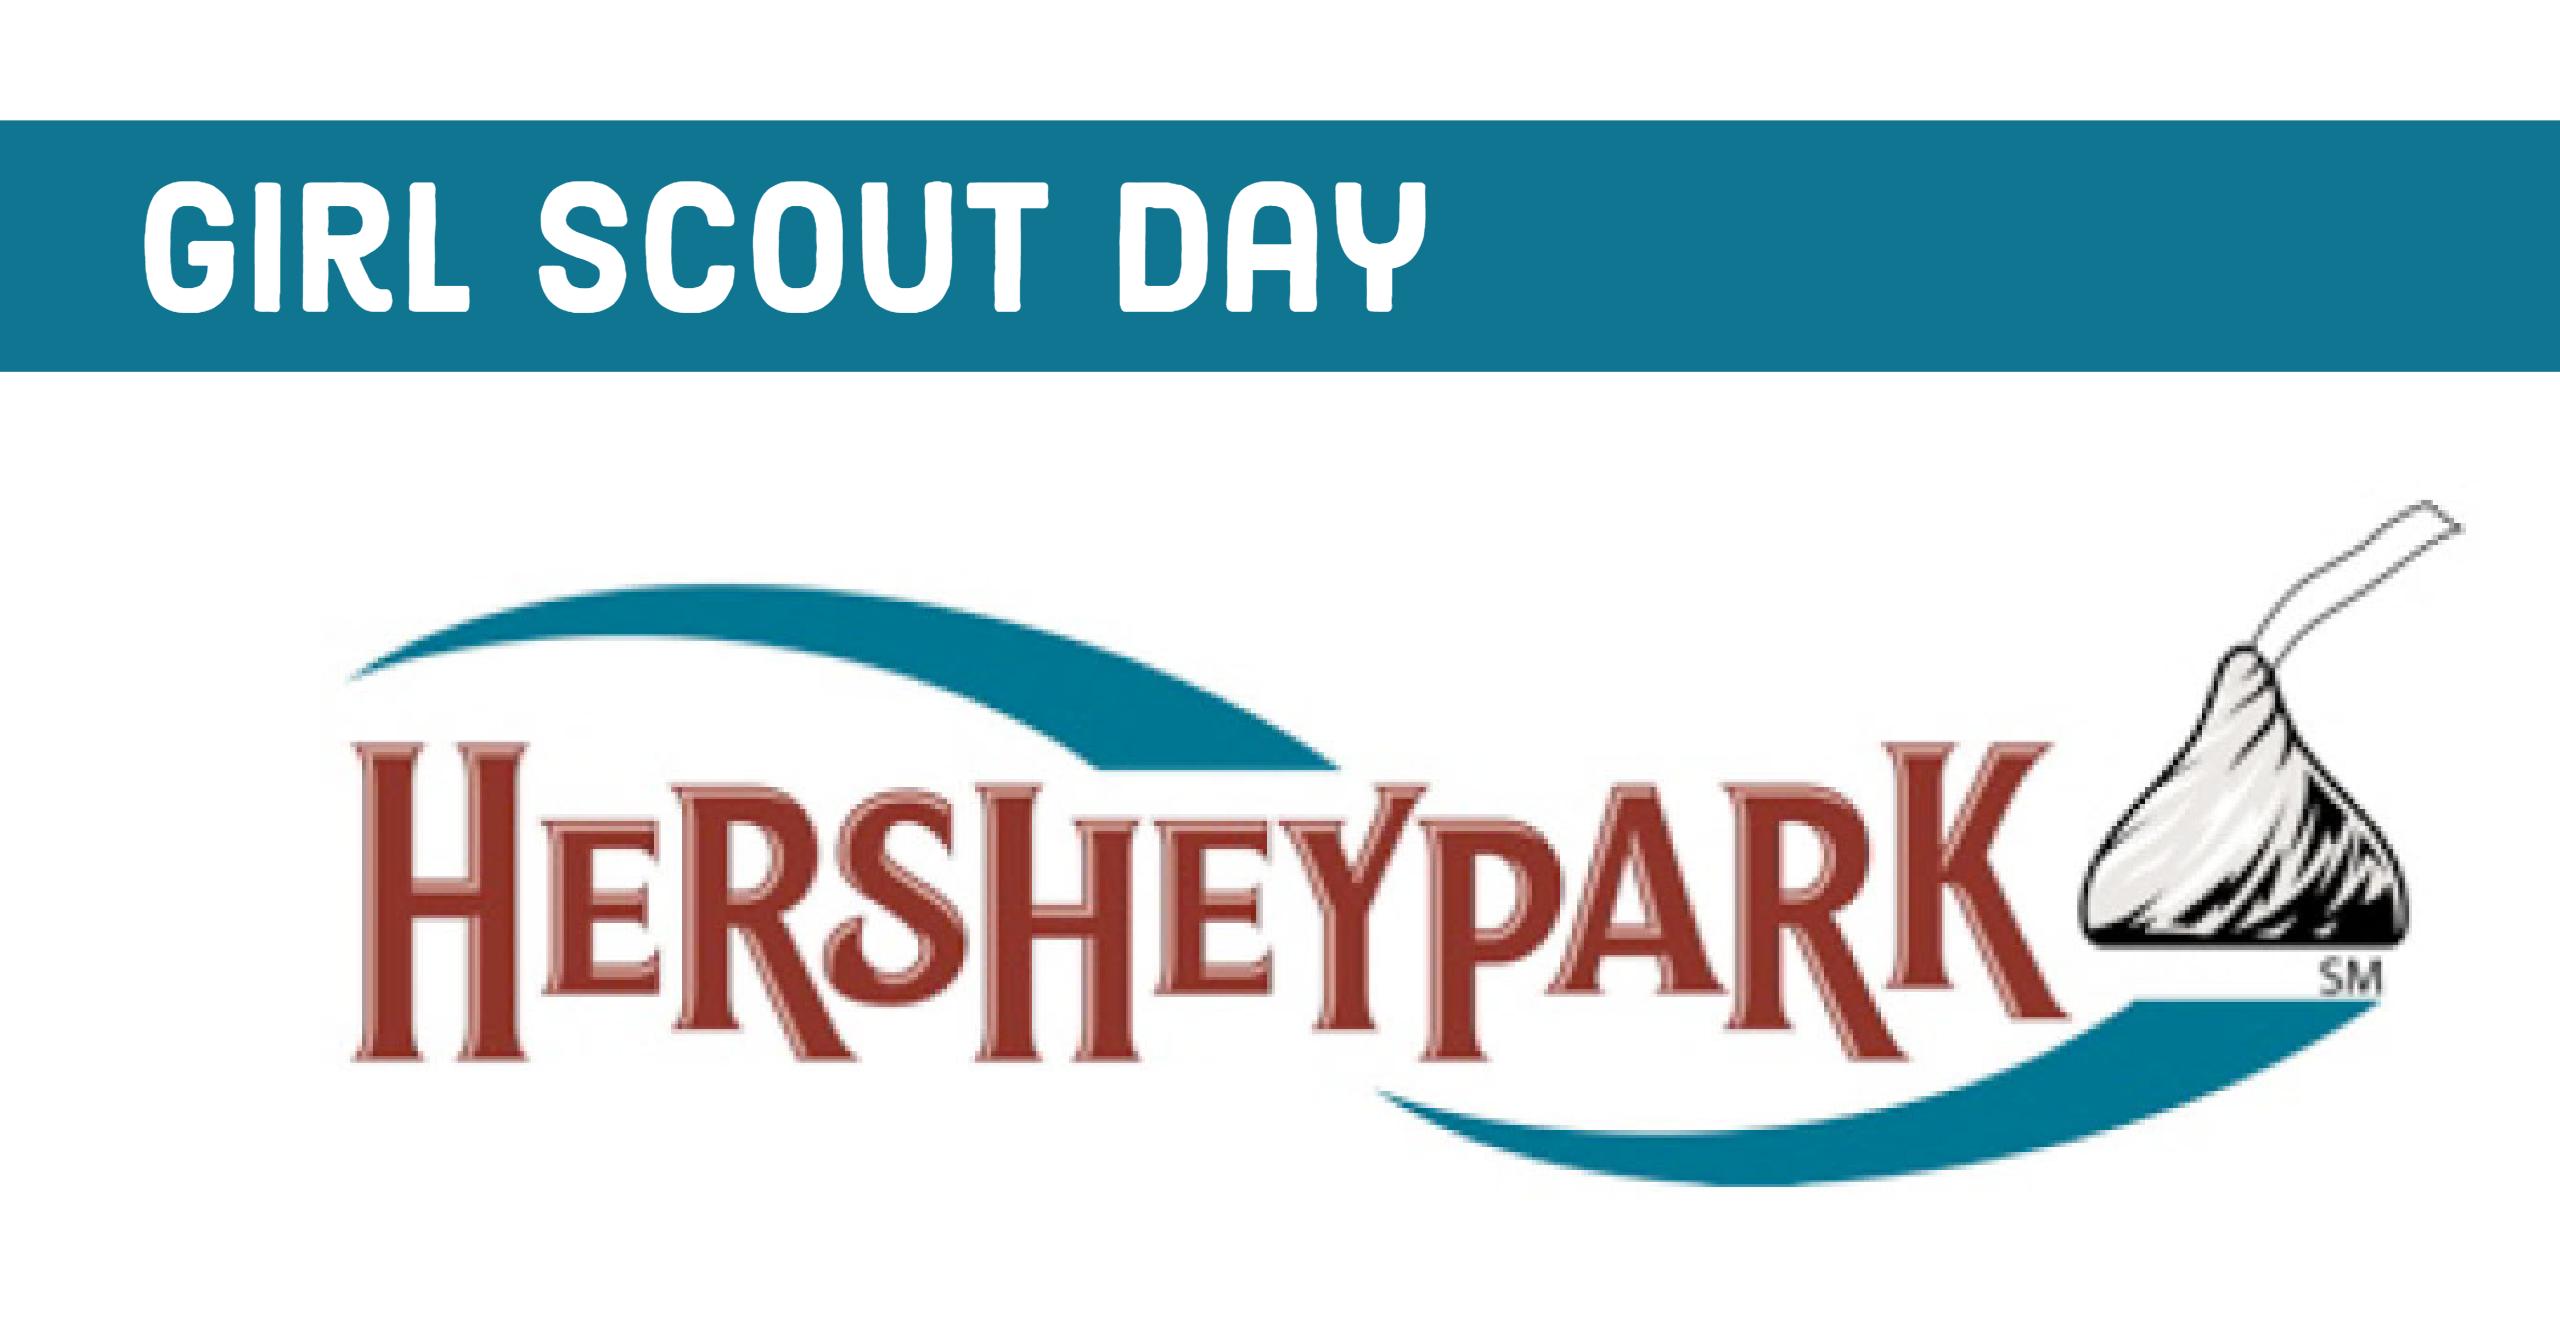 Hersheypark Logo - Girl Scout Day at Hersheypark | DullesMoms.com